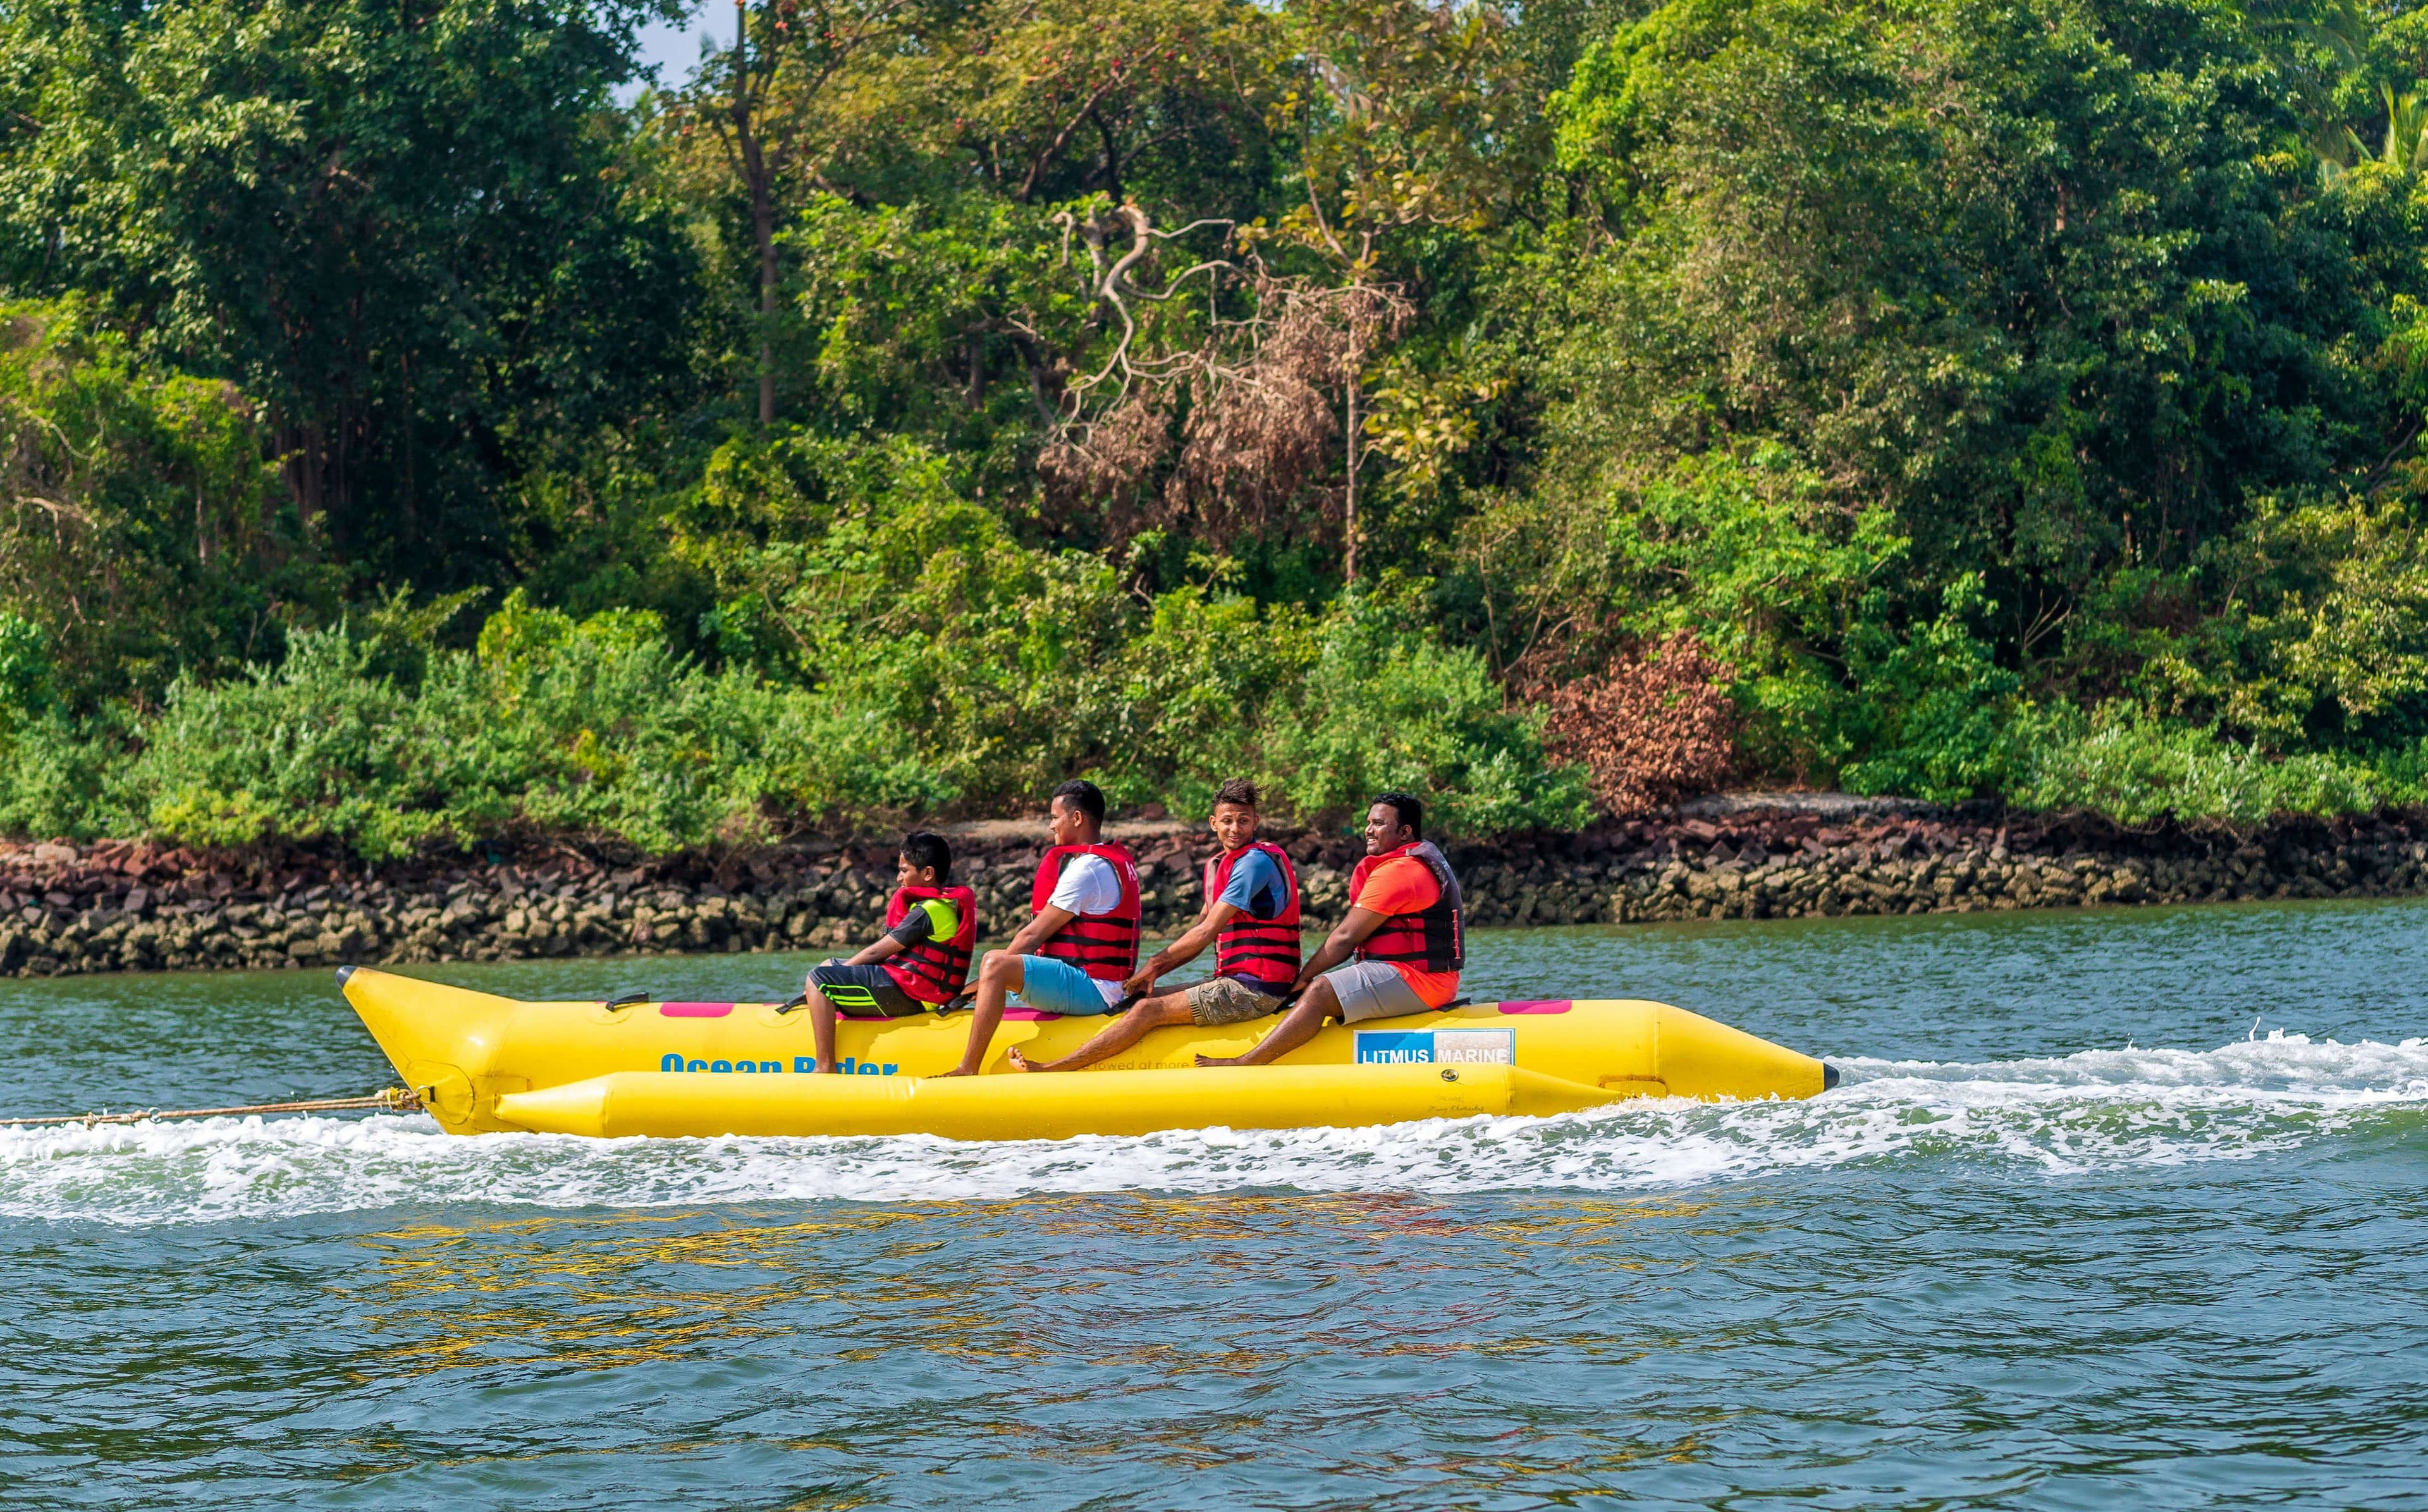 Four people in the banana boat enjoining the nature in Bentota Sri Lanka 